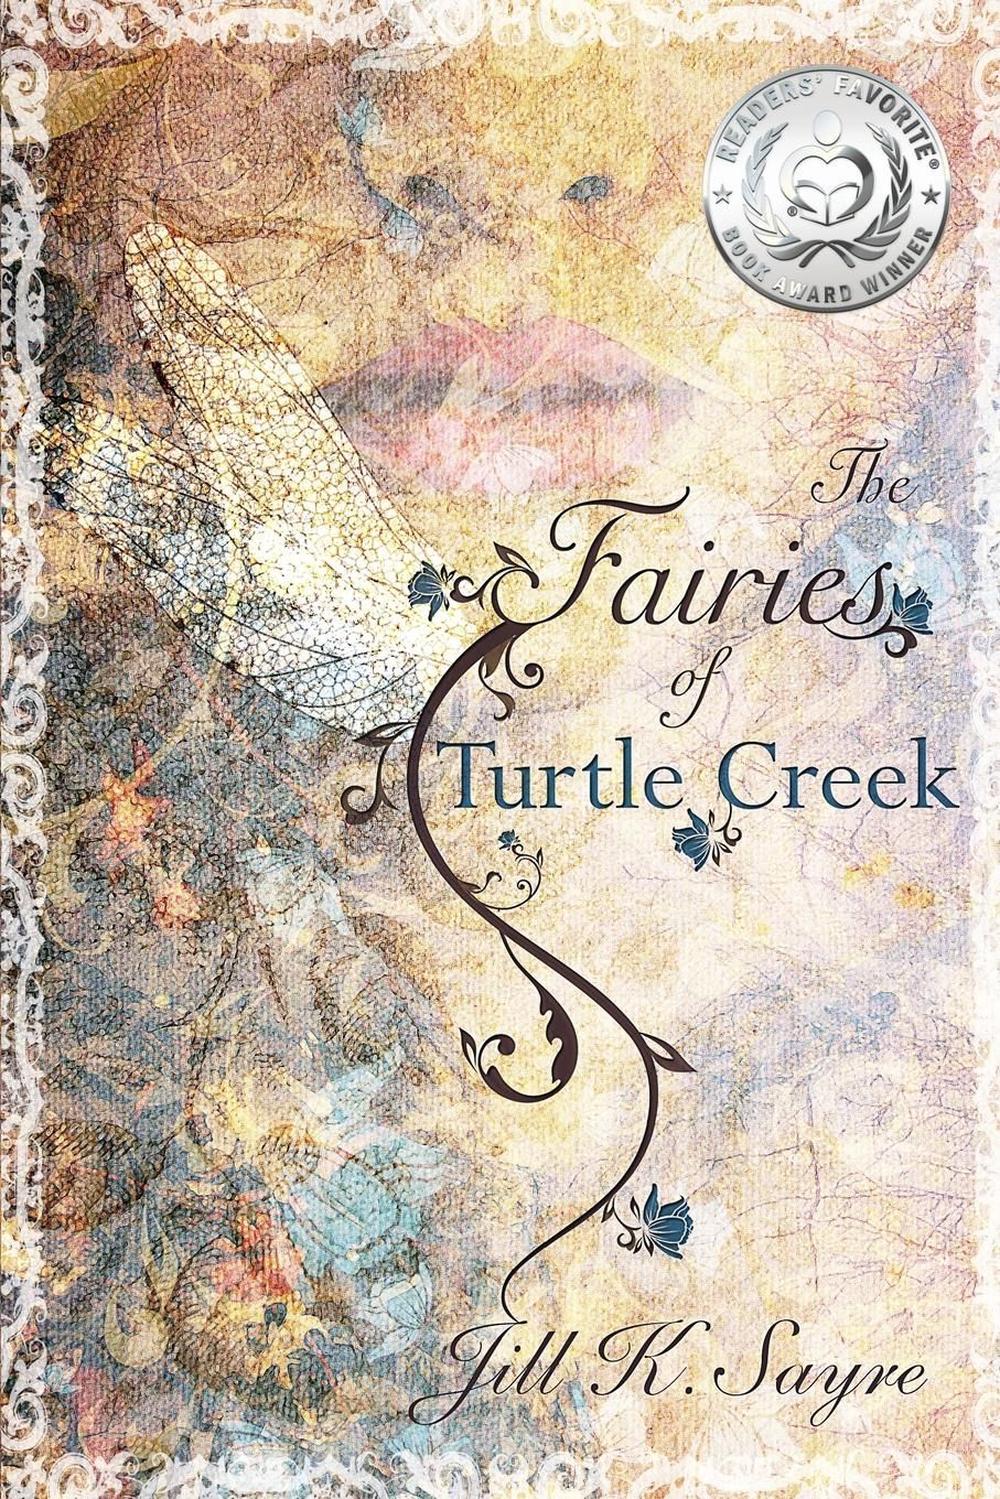 The Fairies of Turtle Creek by Jill K. Sayre